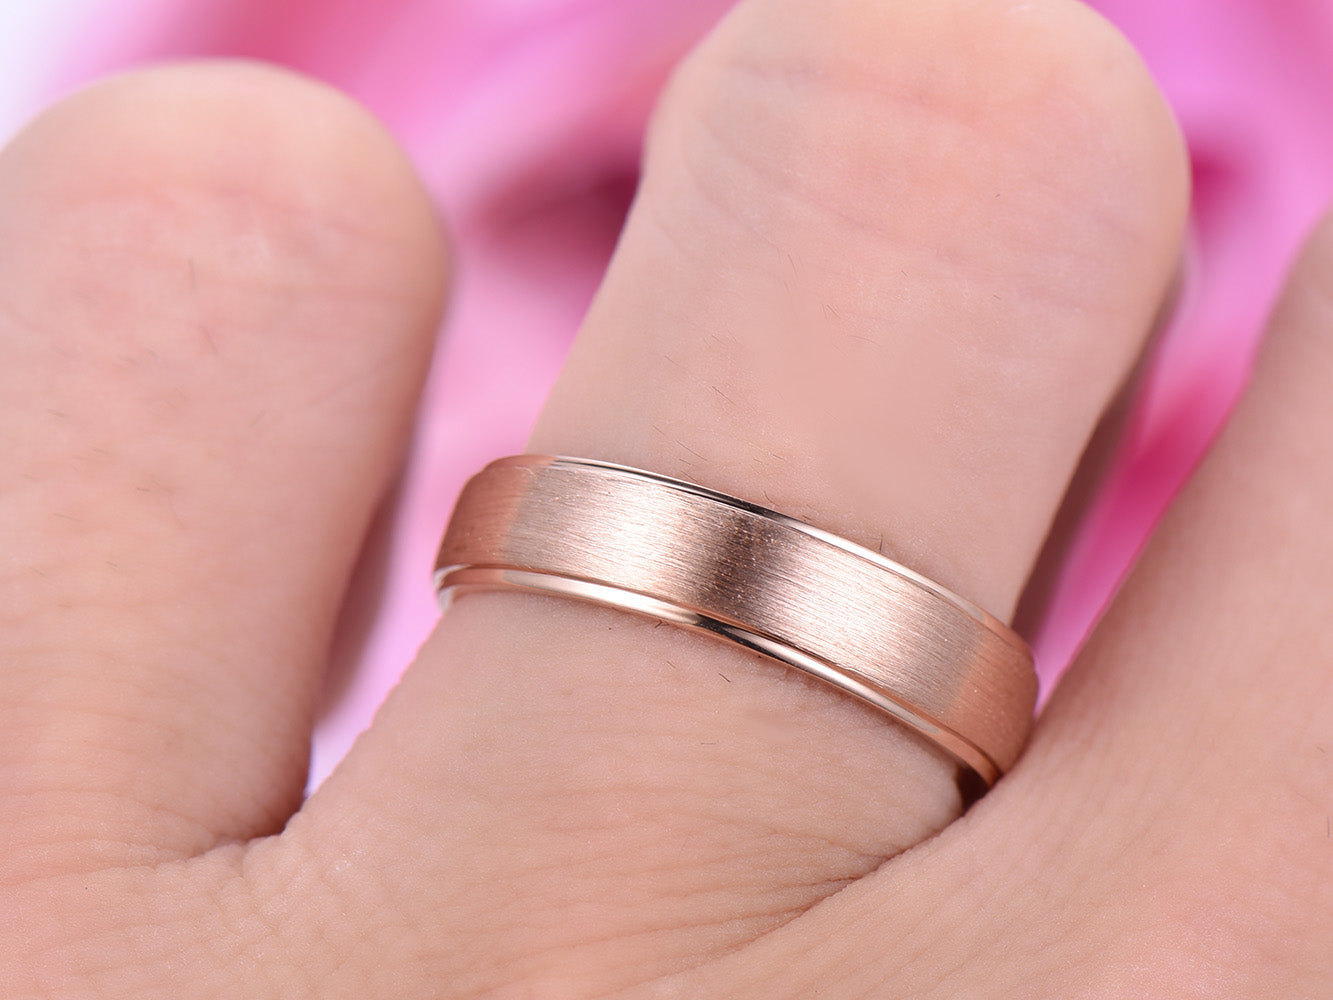 Reserved for Andile 1st payment, Custom Men's Wedding Ring 14K Rose Gold